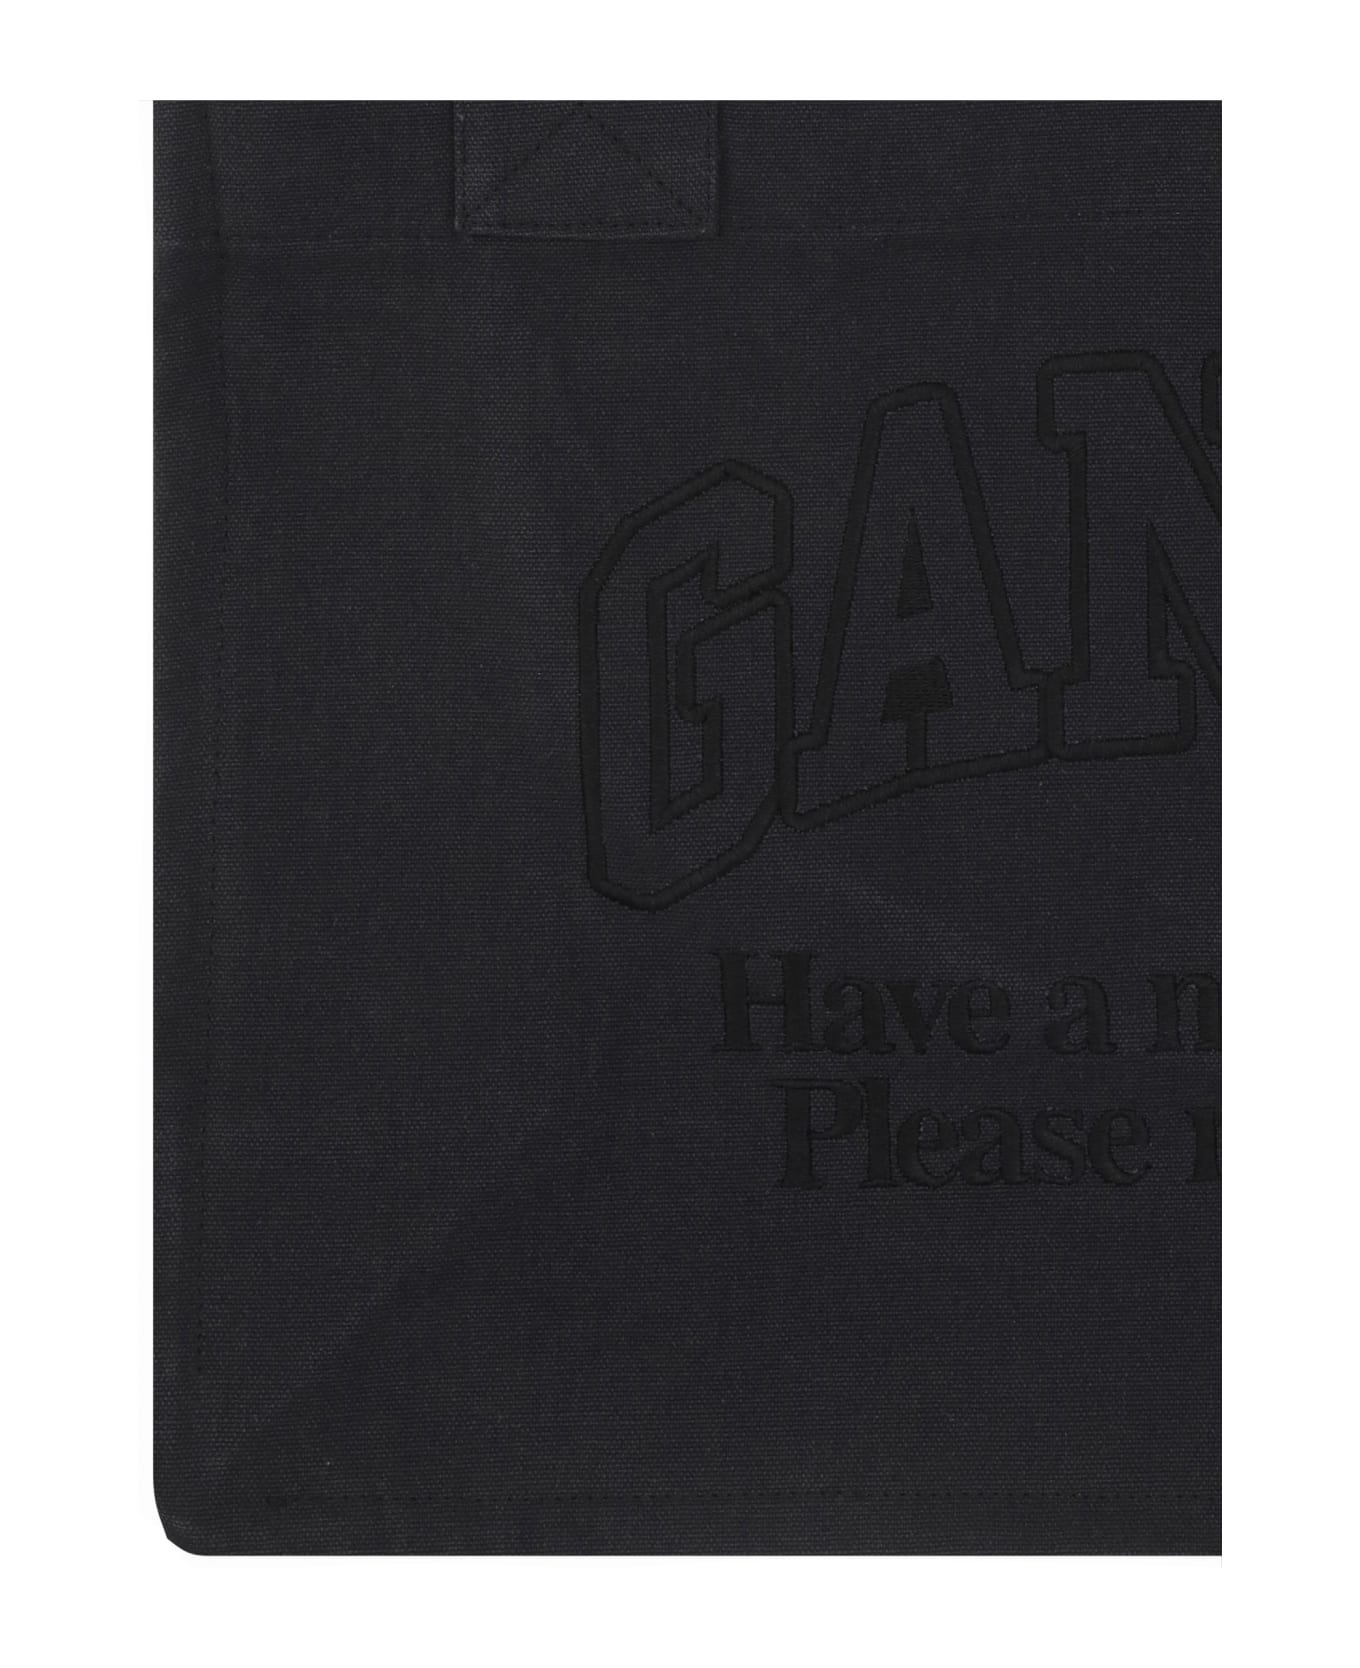 Ganni Easy Shopper Handbag - BLACK